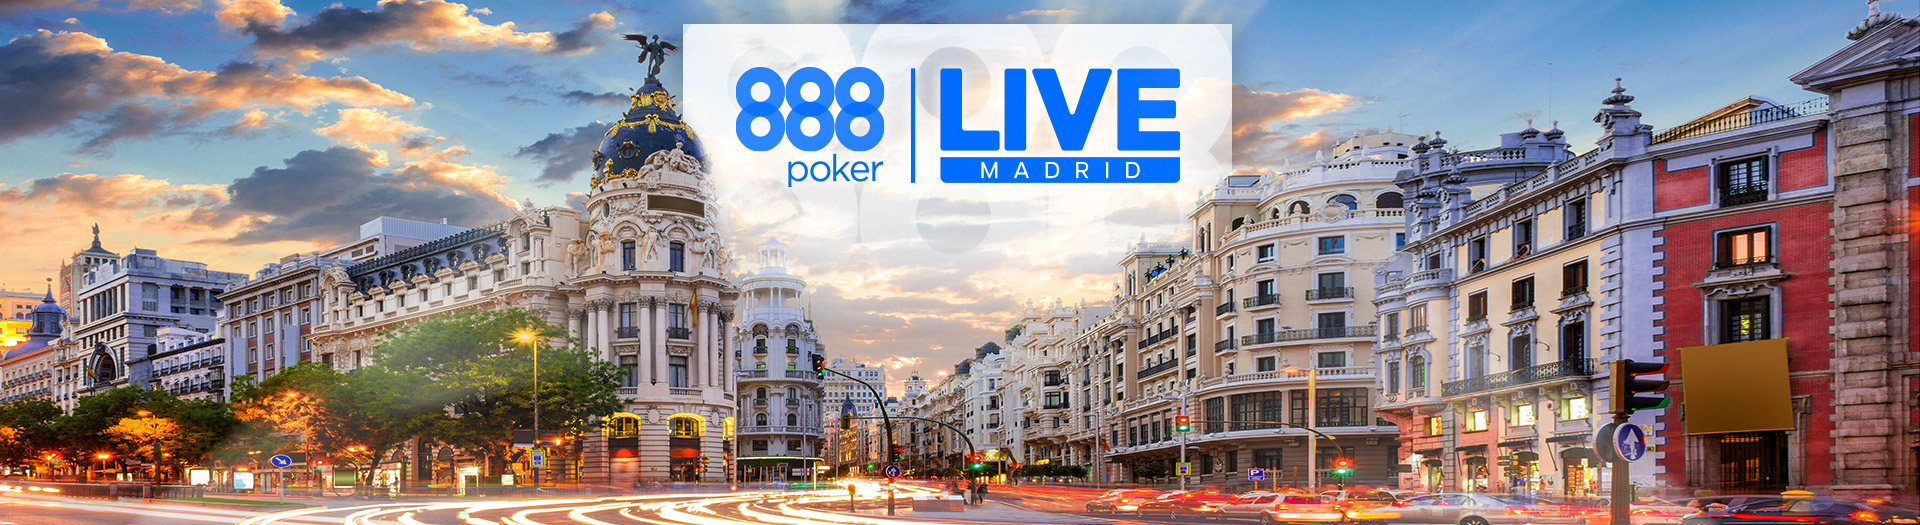 TS-39001-Live-Madrid-main-image_LP-1669119842292_tcm1987-572719